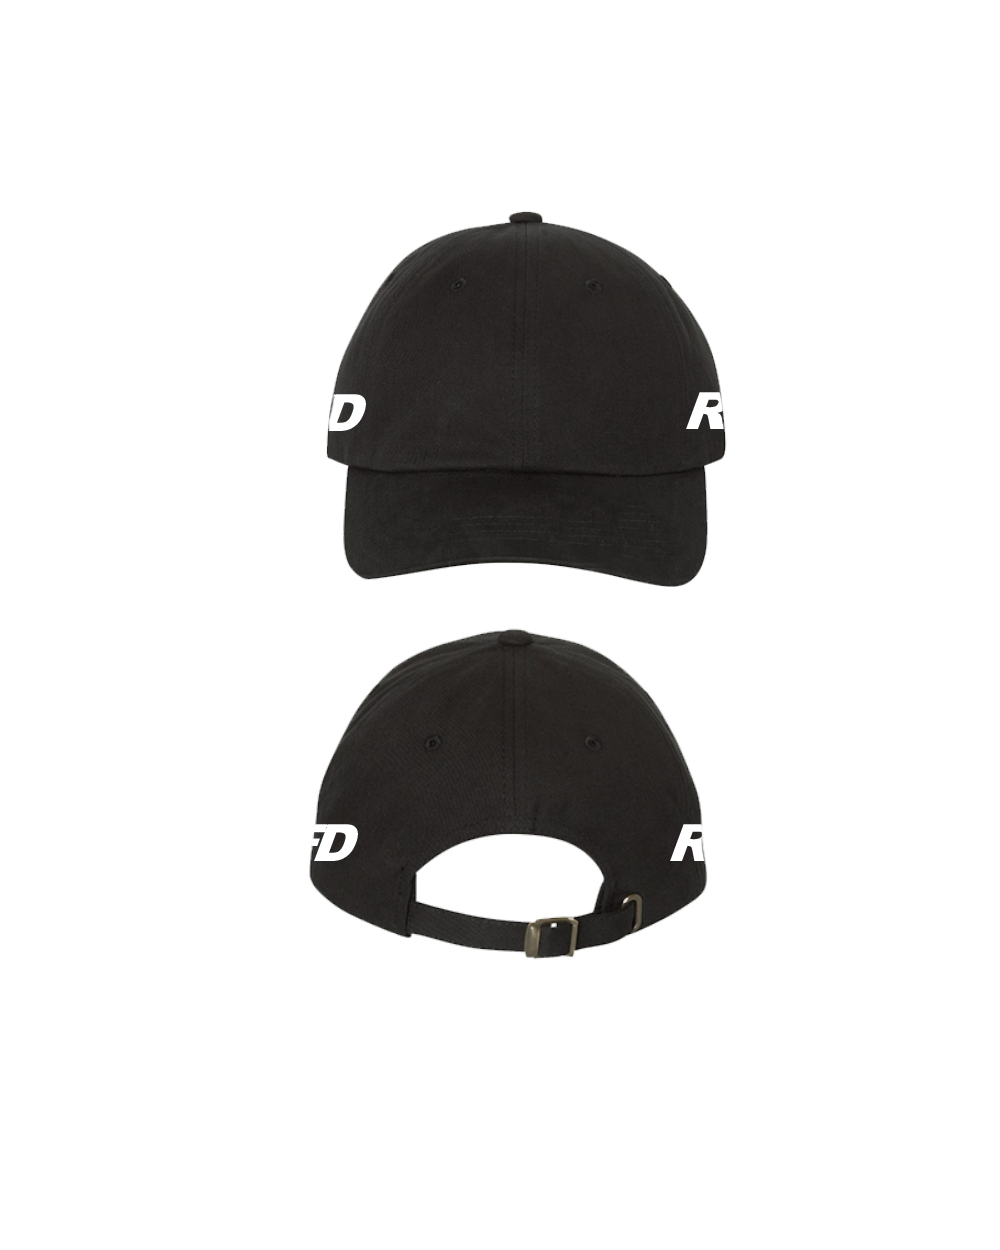 RKFD Profile Unstructured Hat (Black)